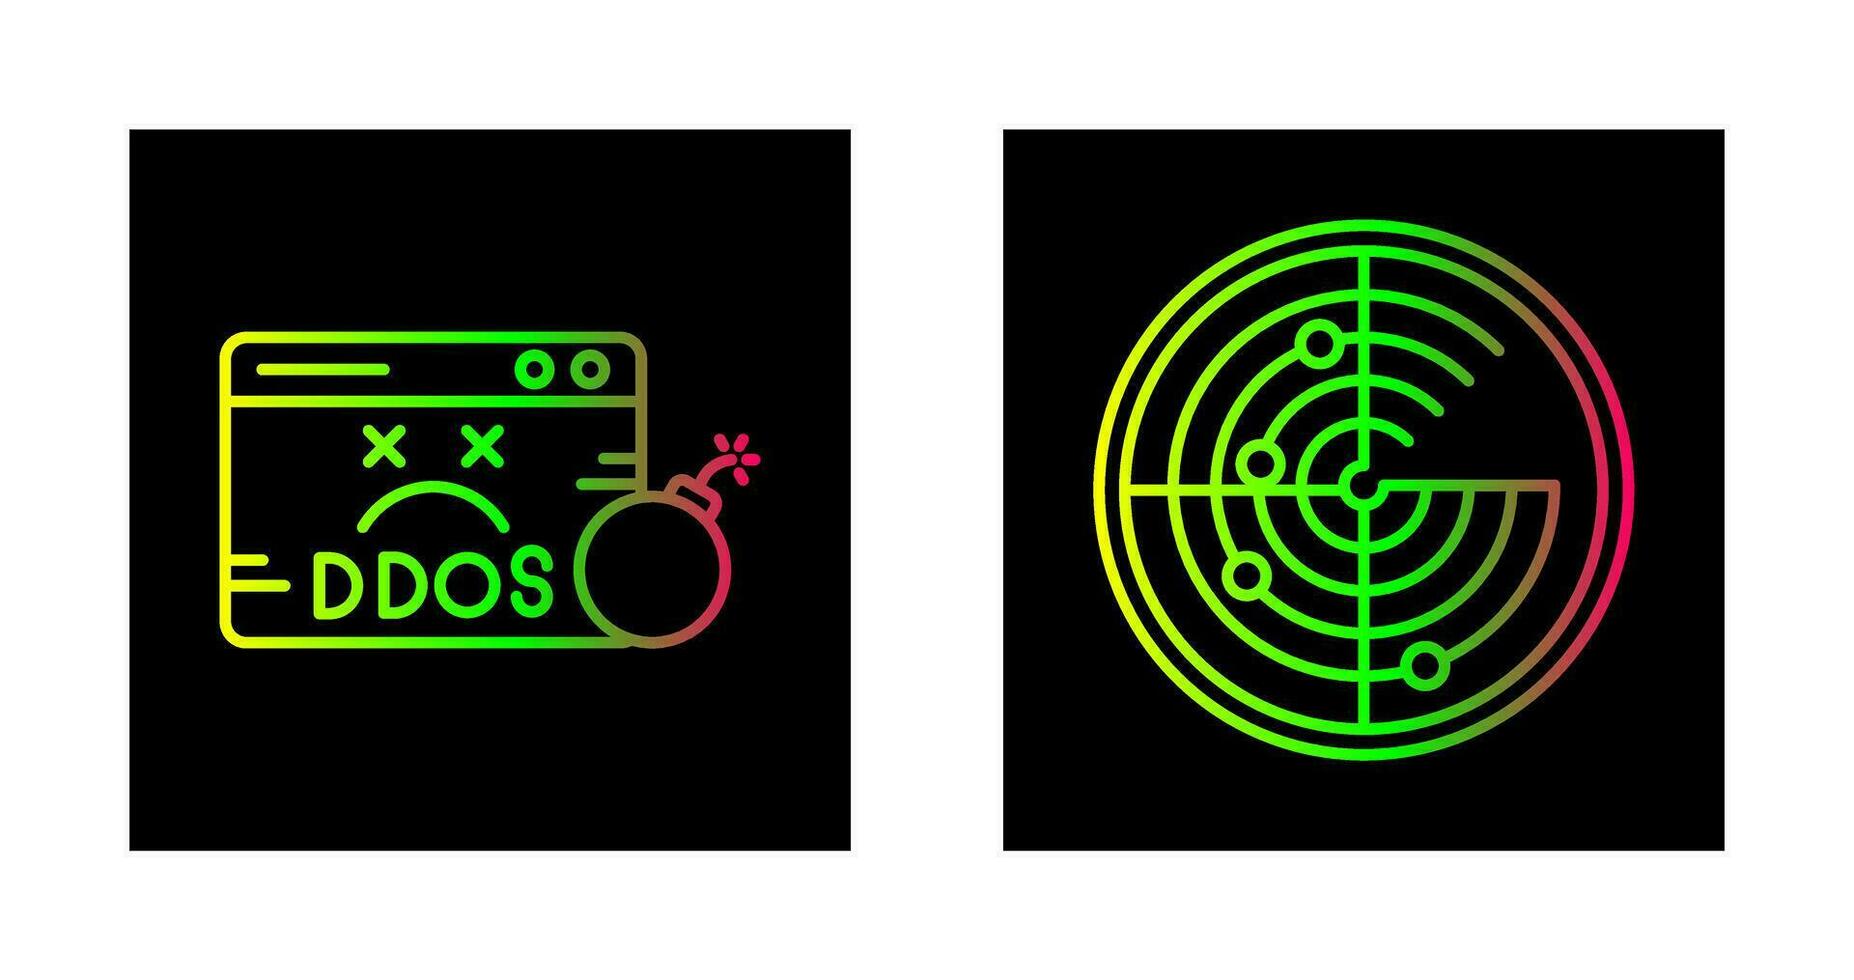 Ddos and Radar Icon vector